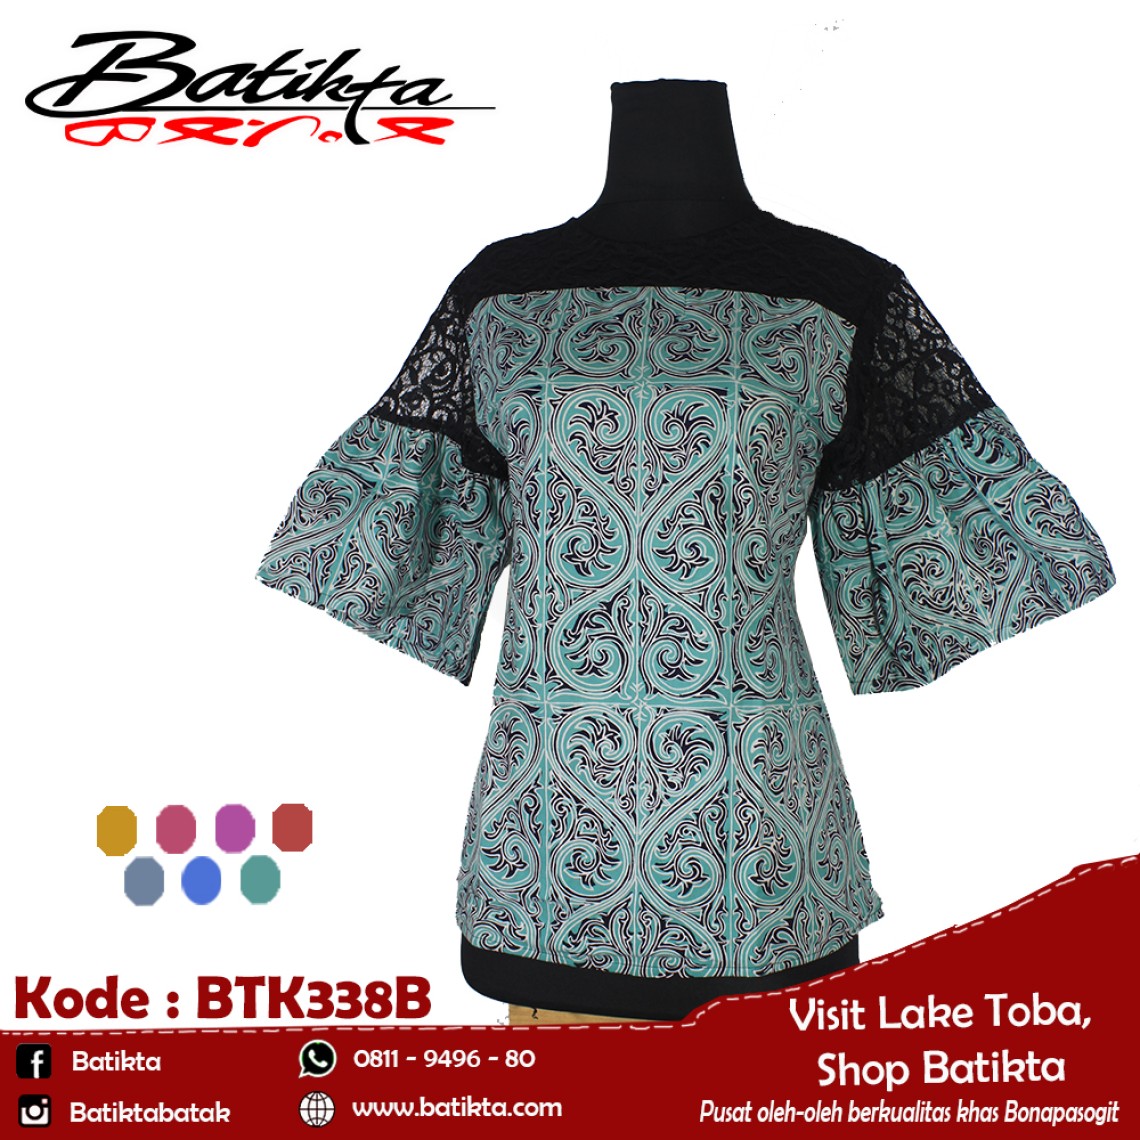 BTK338B Blus Batik Motif Gorga Warna Hijau Tosca Putih Hitam profile picture